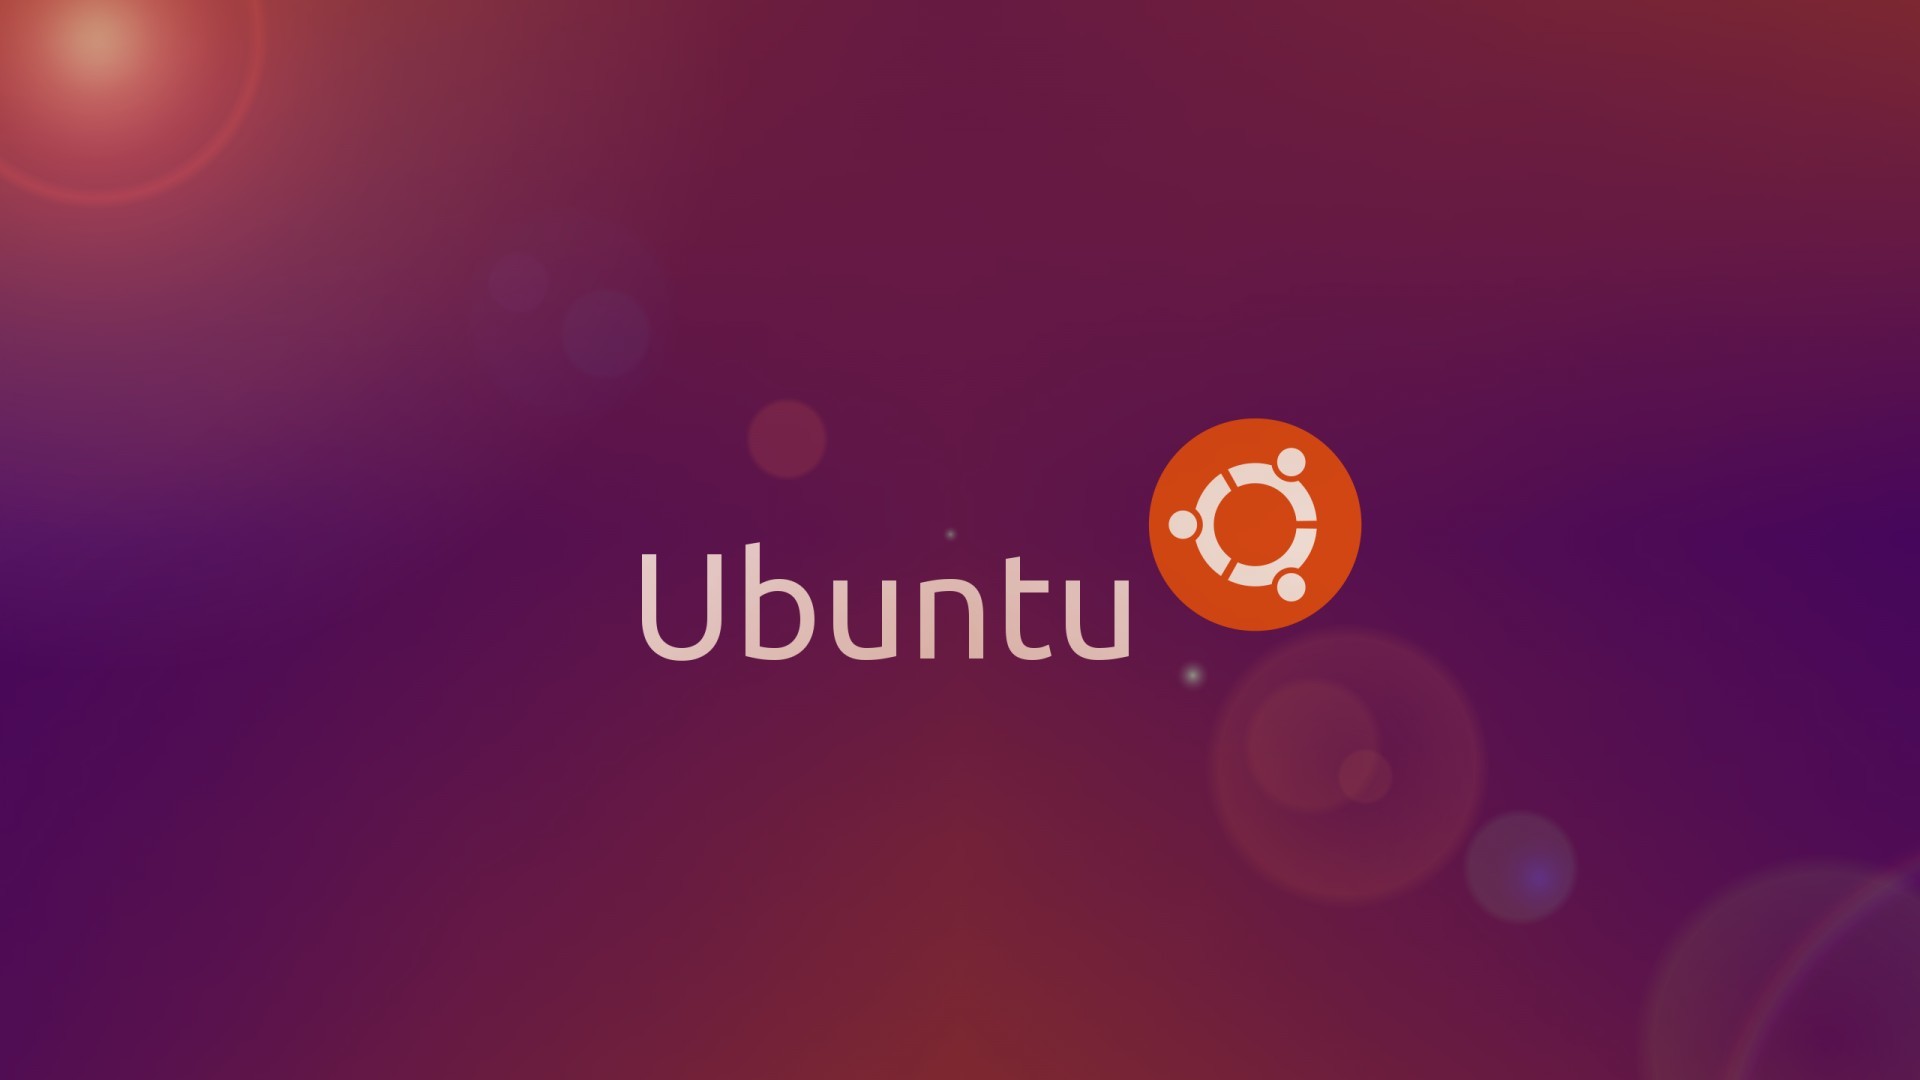 ubuntu wallpaper download,text,logo,font,orange,violet